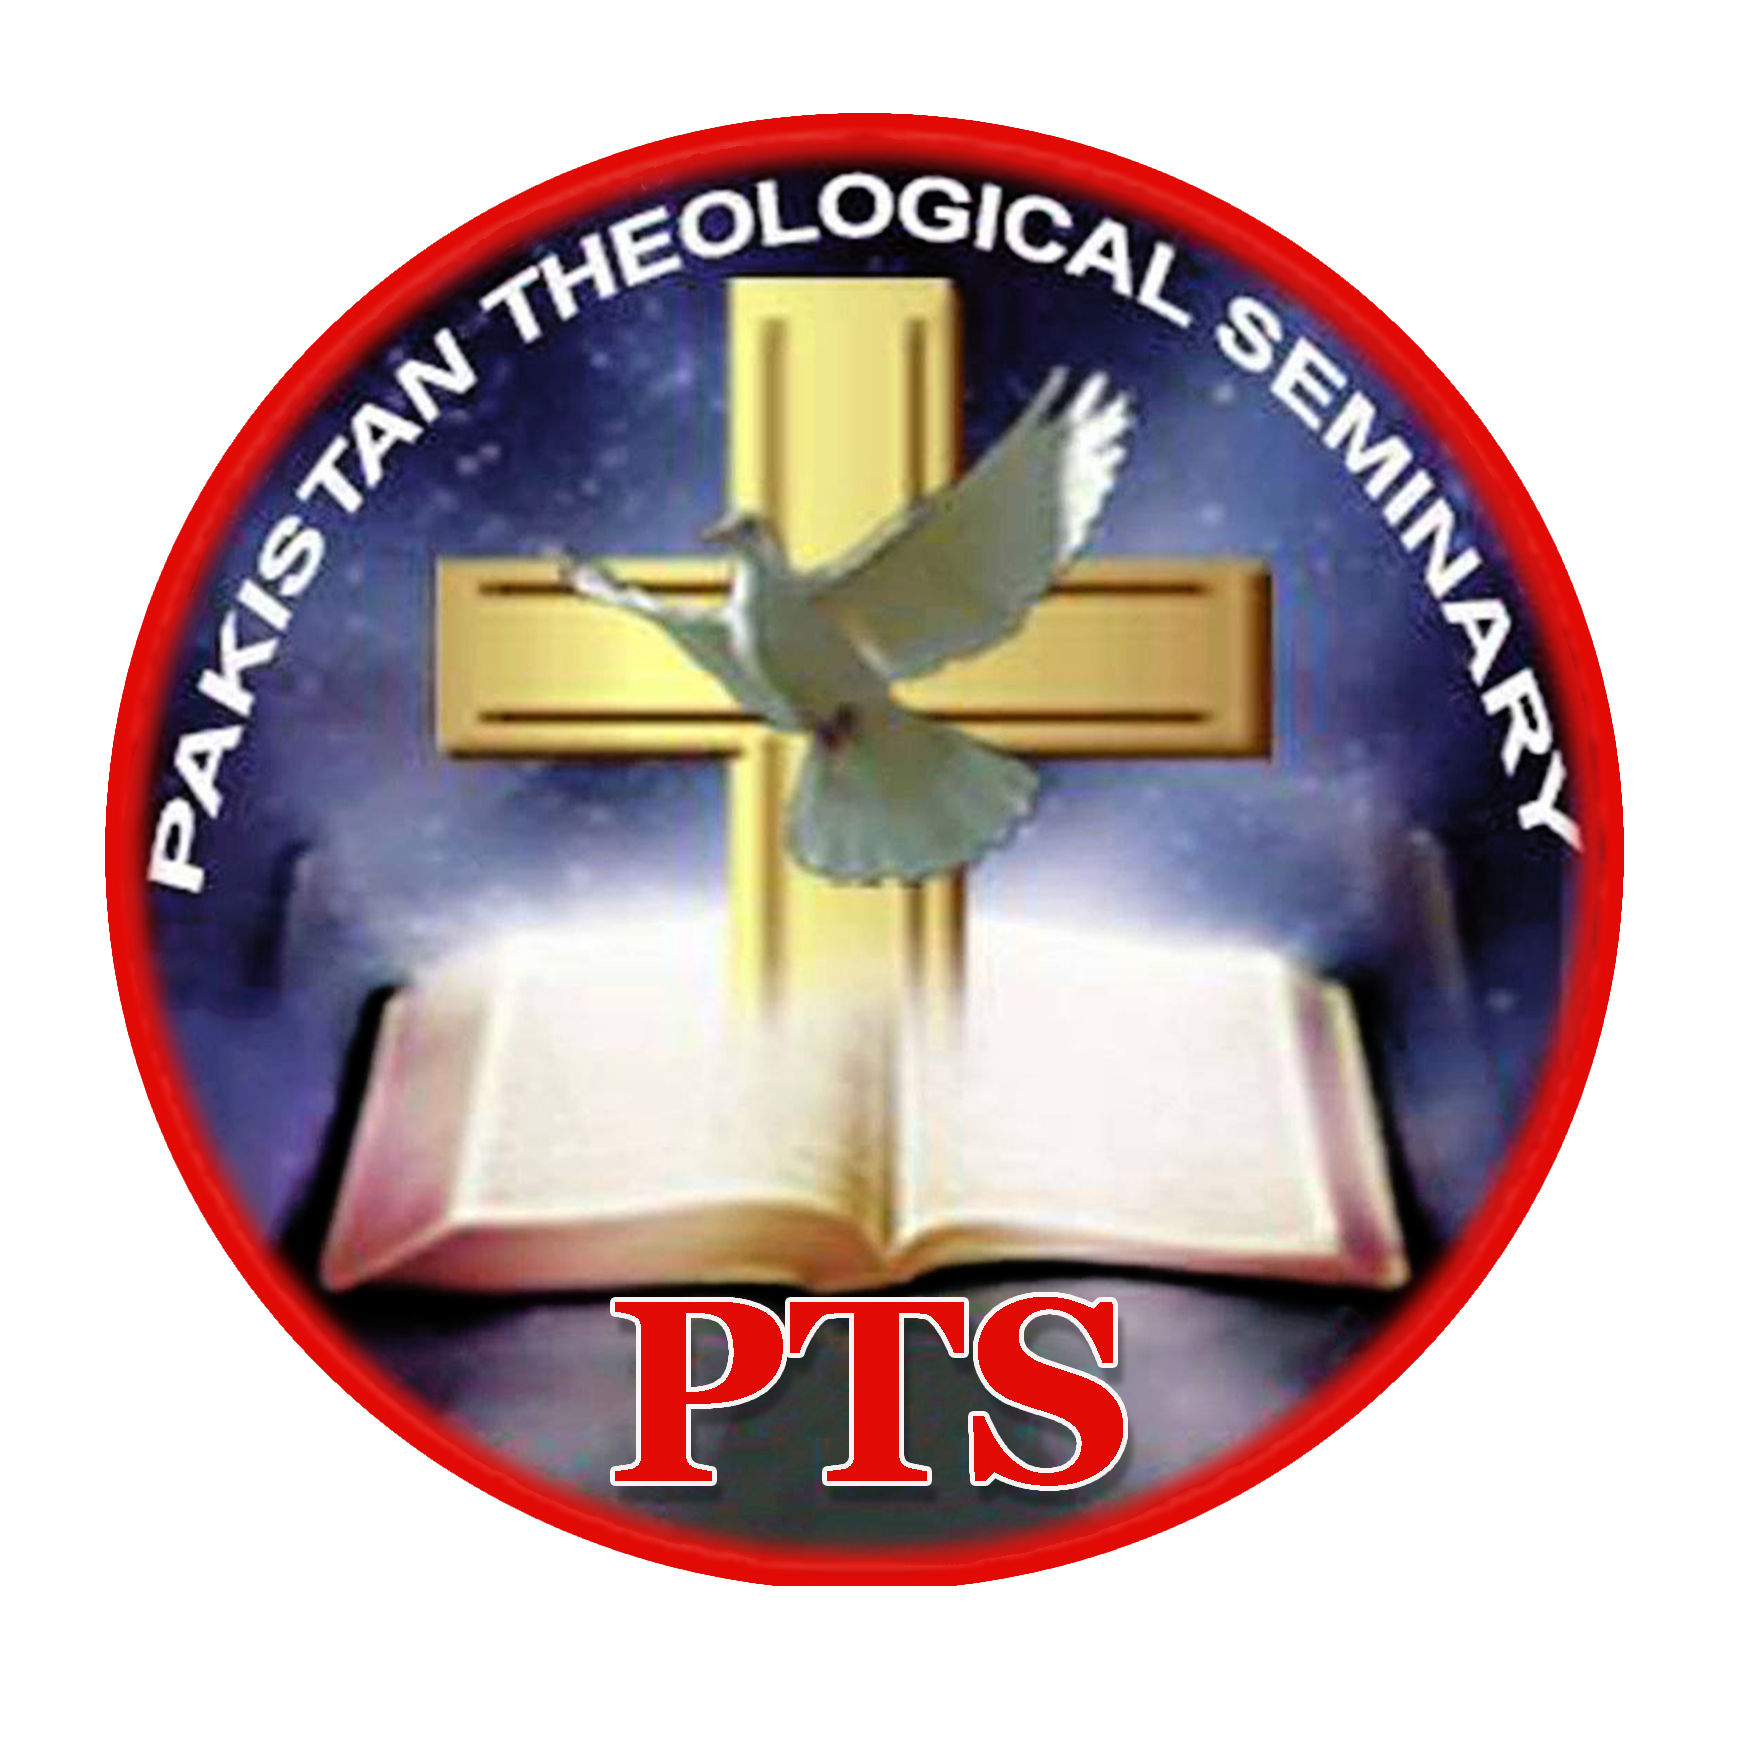 Pakistan Theological Seminary